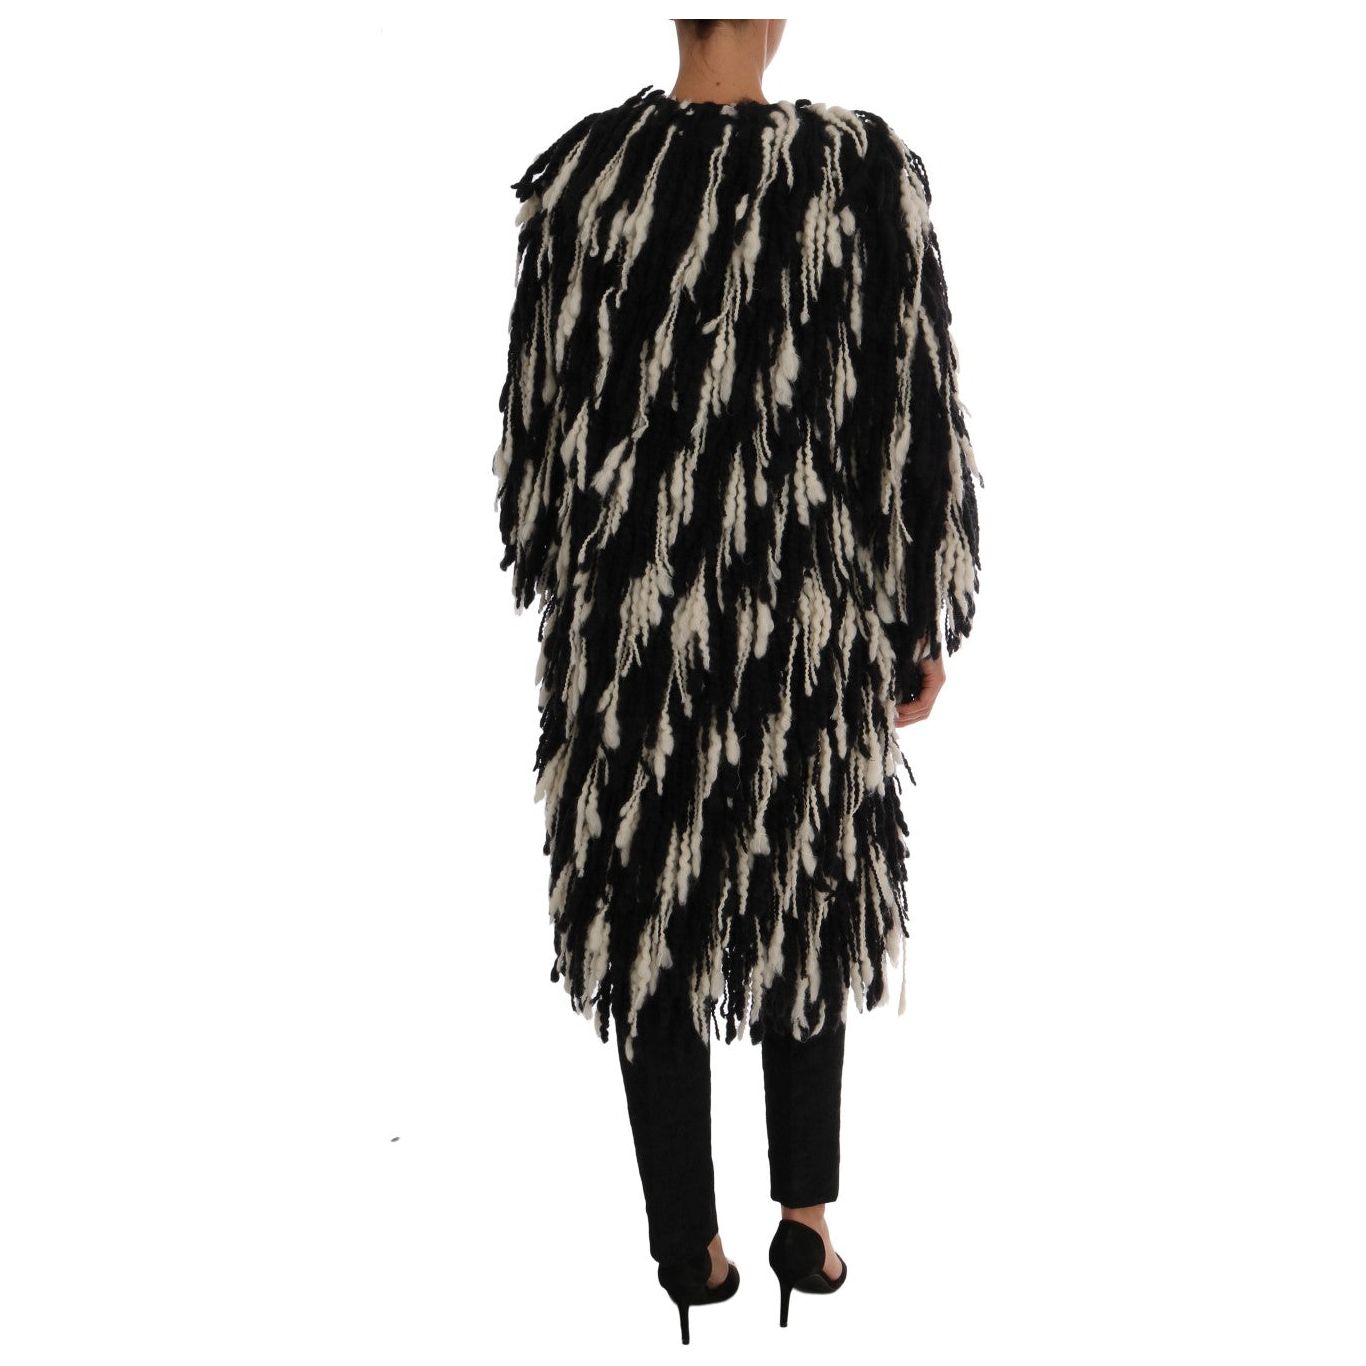 Dolce & Gabbana Black and White Fringed Wool Coat Jacket Coats & Jackets black-white-fringes-coat-wool-coat